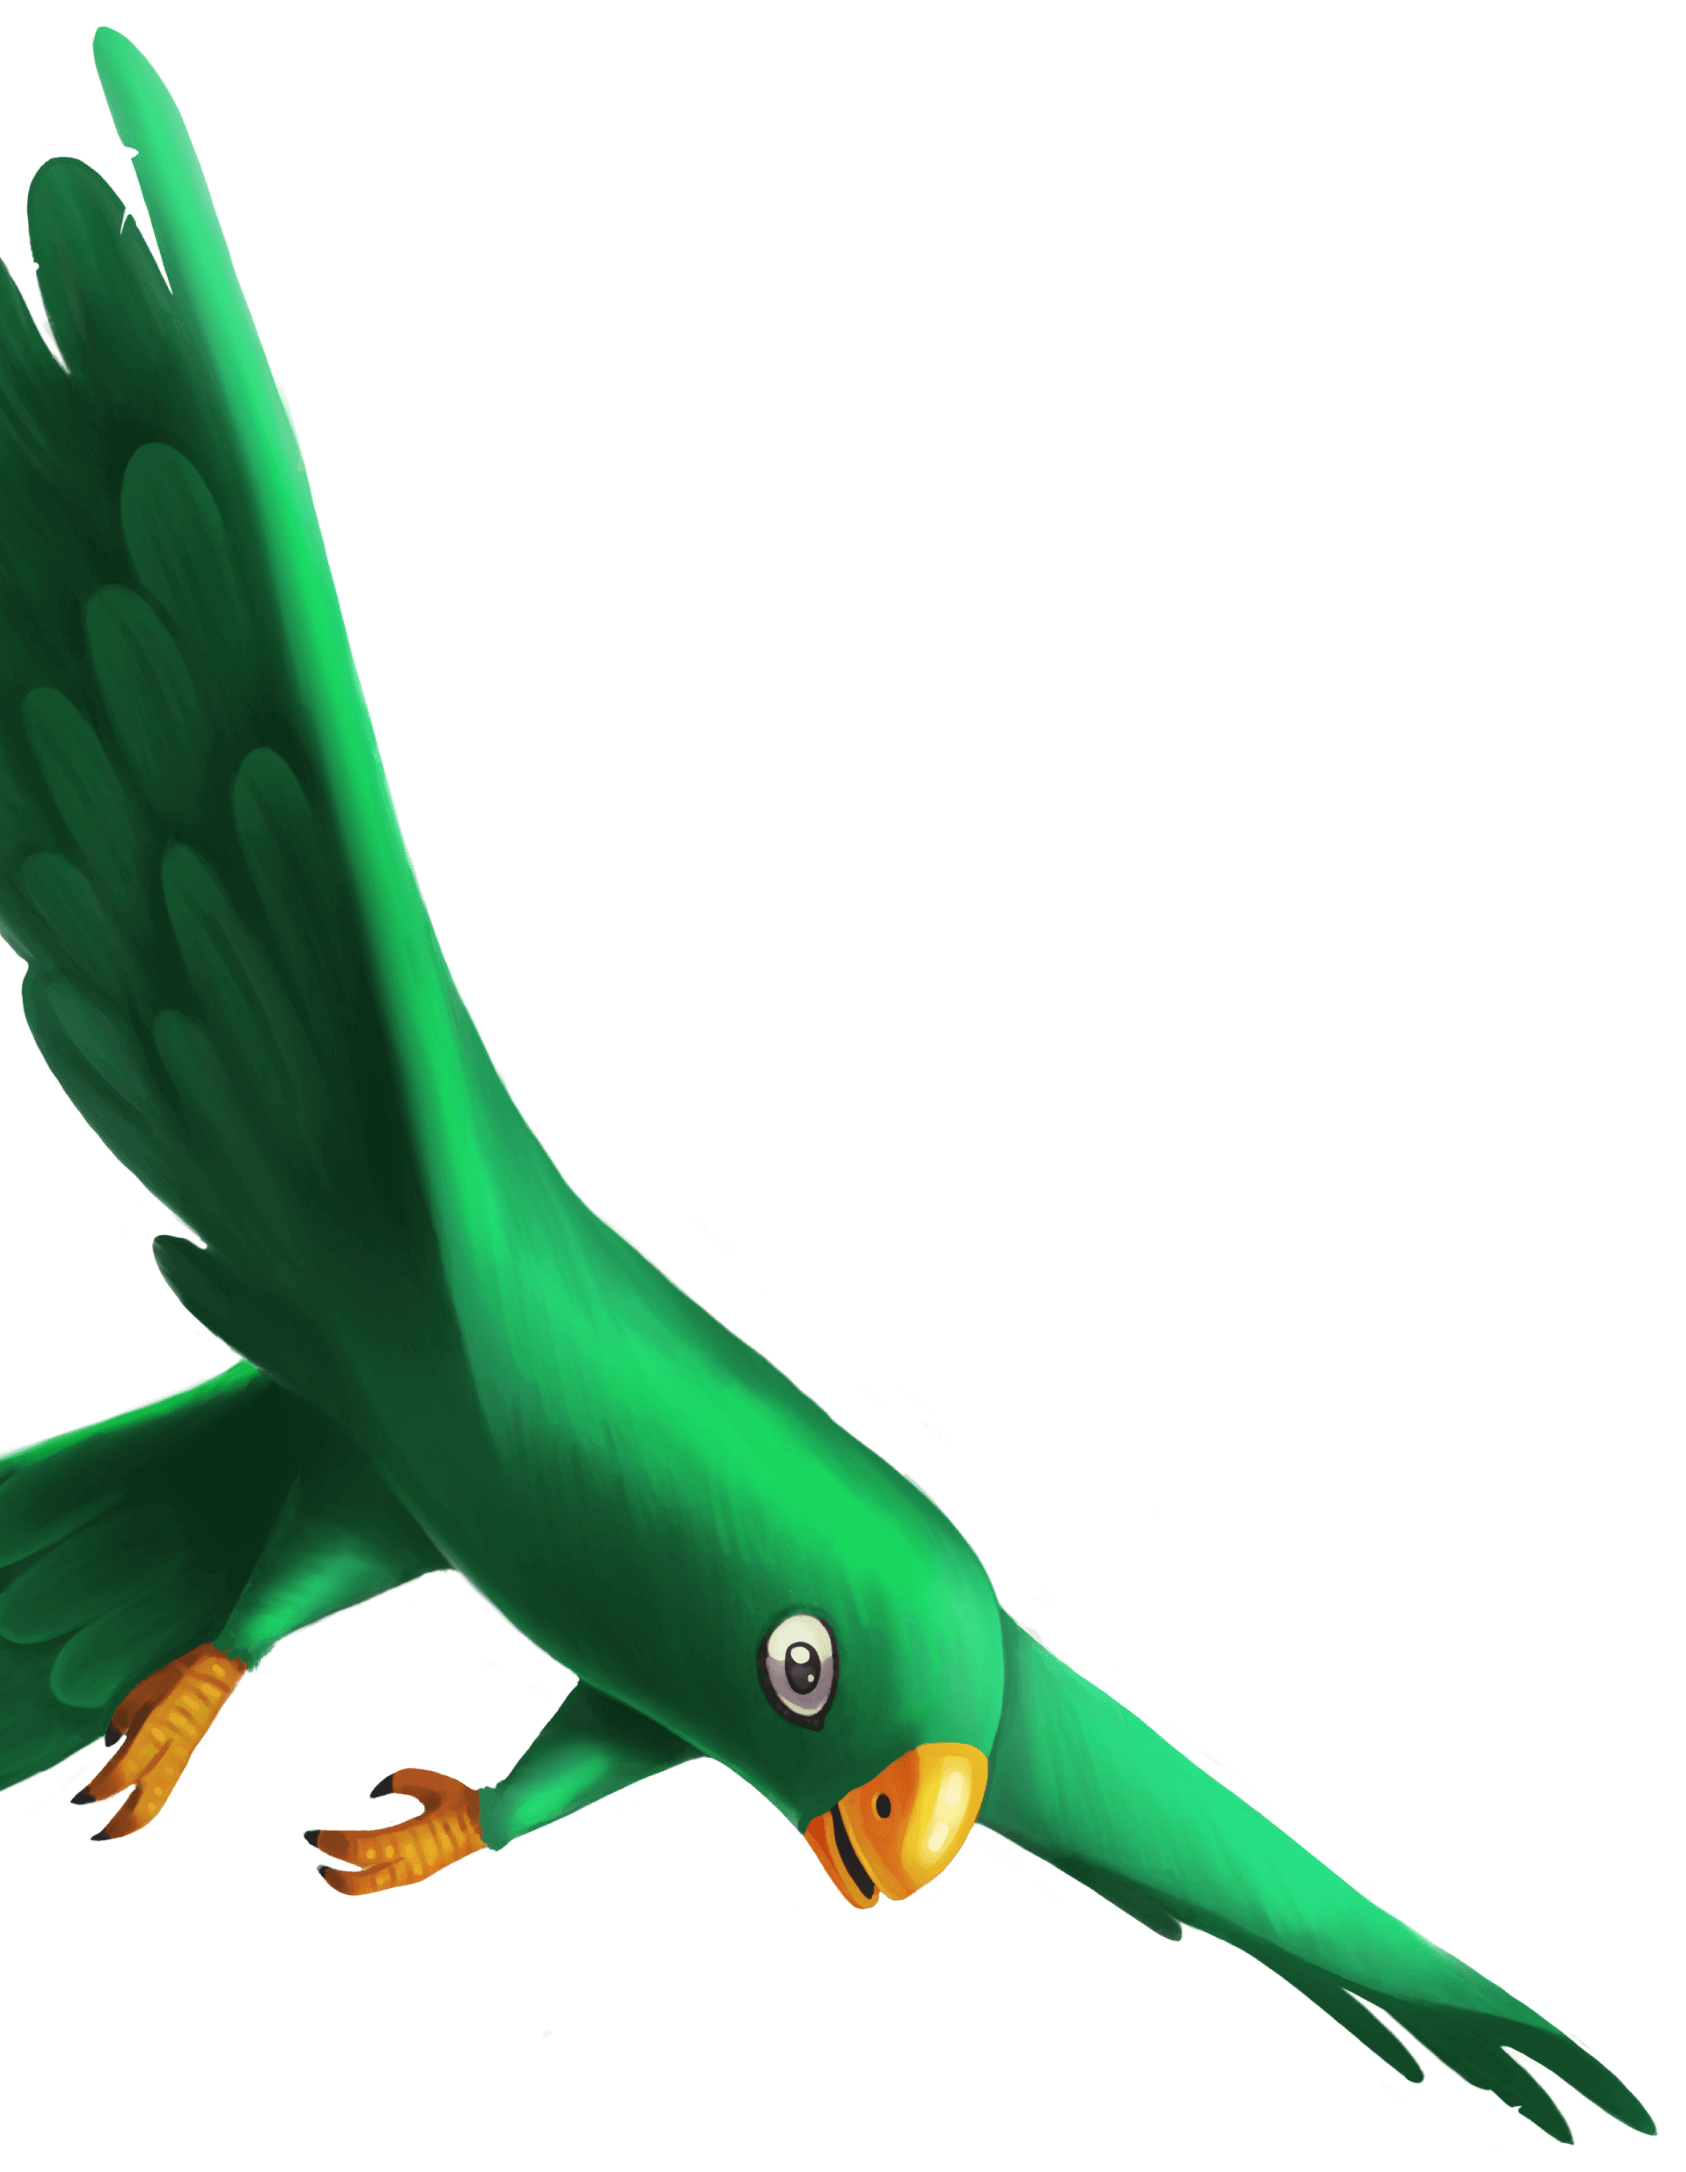 Big green bird